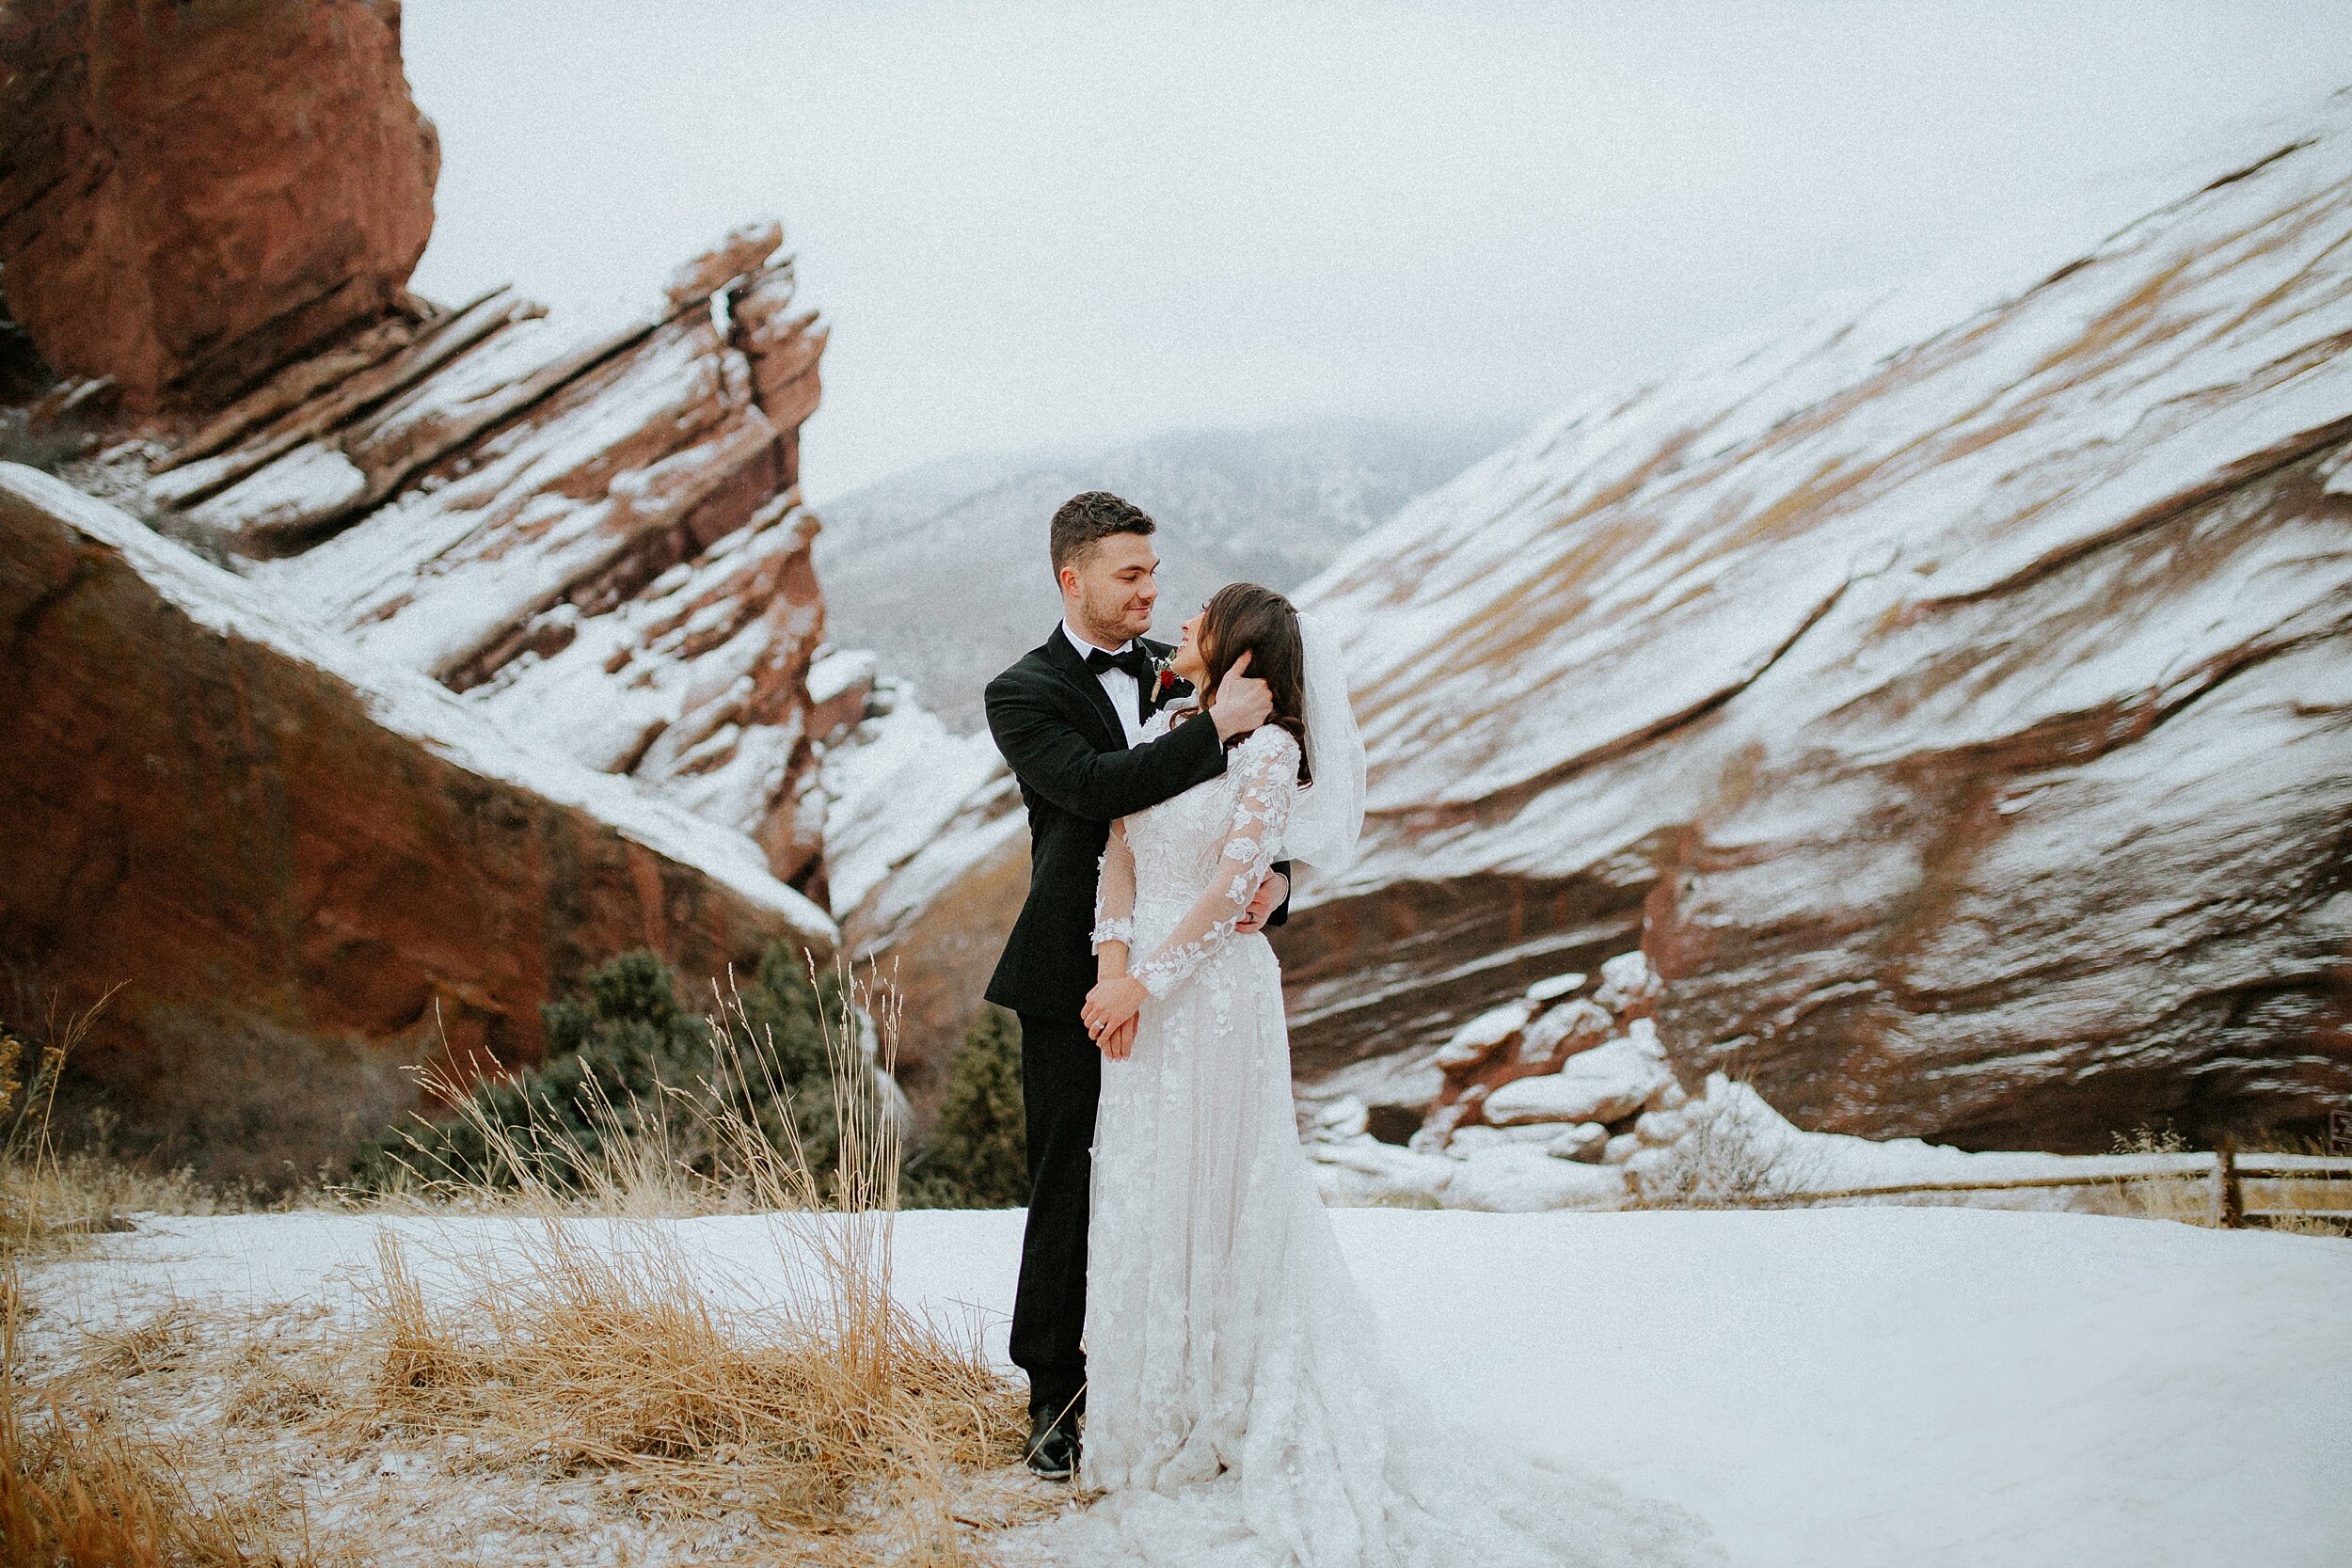 Red-Rocks-Morisson-Colorado-Elopement-Micro-Wedding-Print-3.jpg